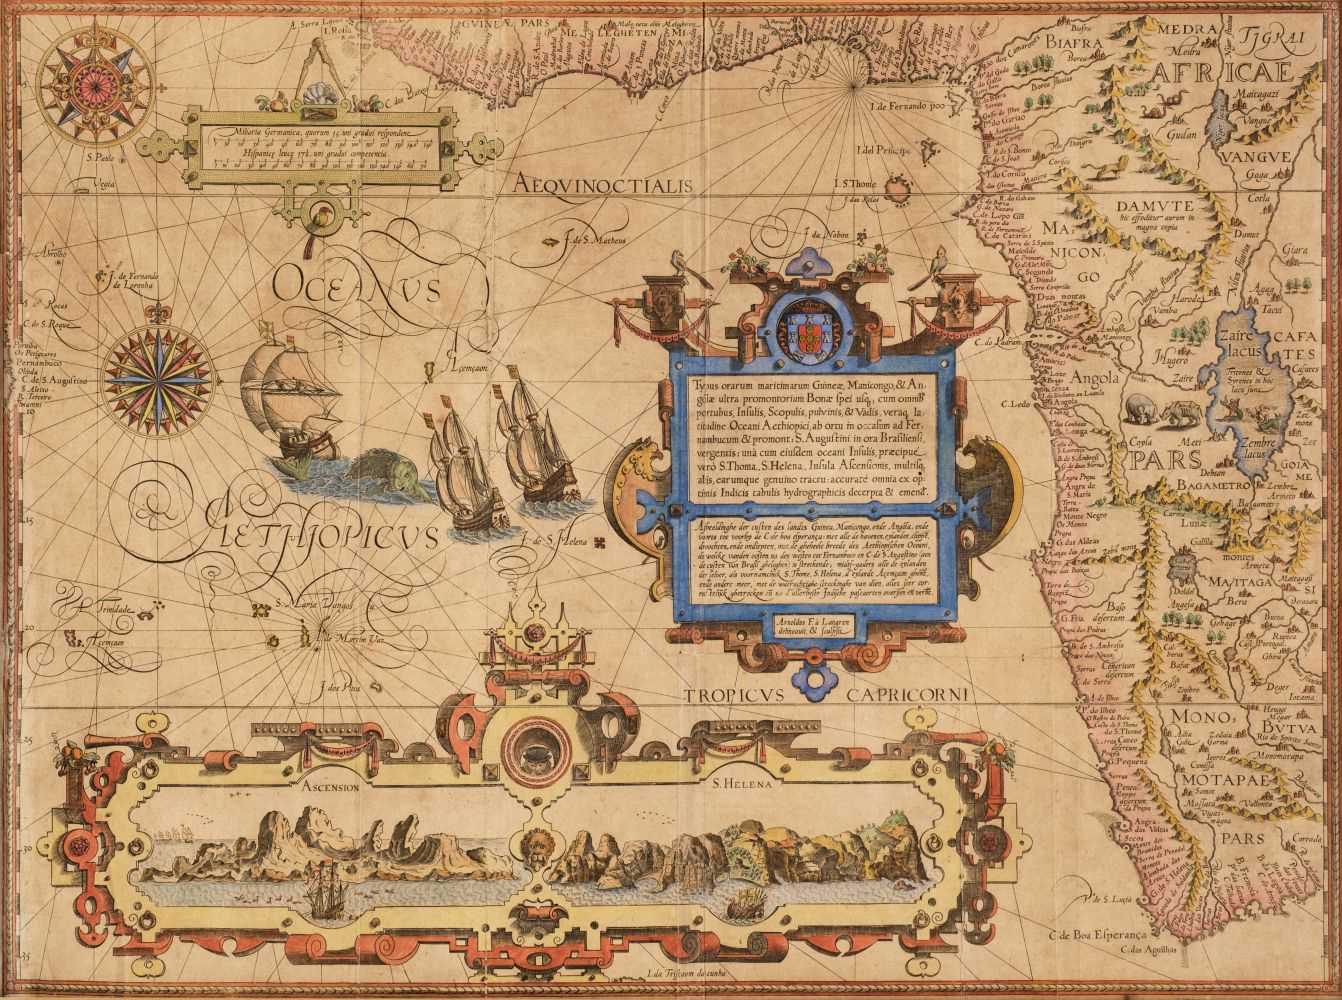 Lot 282 - West Africa. Van Linschoten (Jan), Typus Orarum Maritimarum Guineae, Manicongo...,  circa 1596